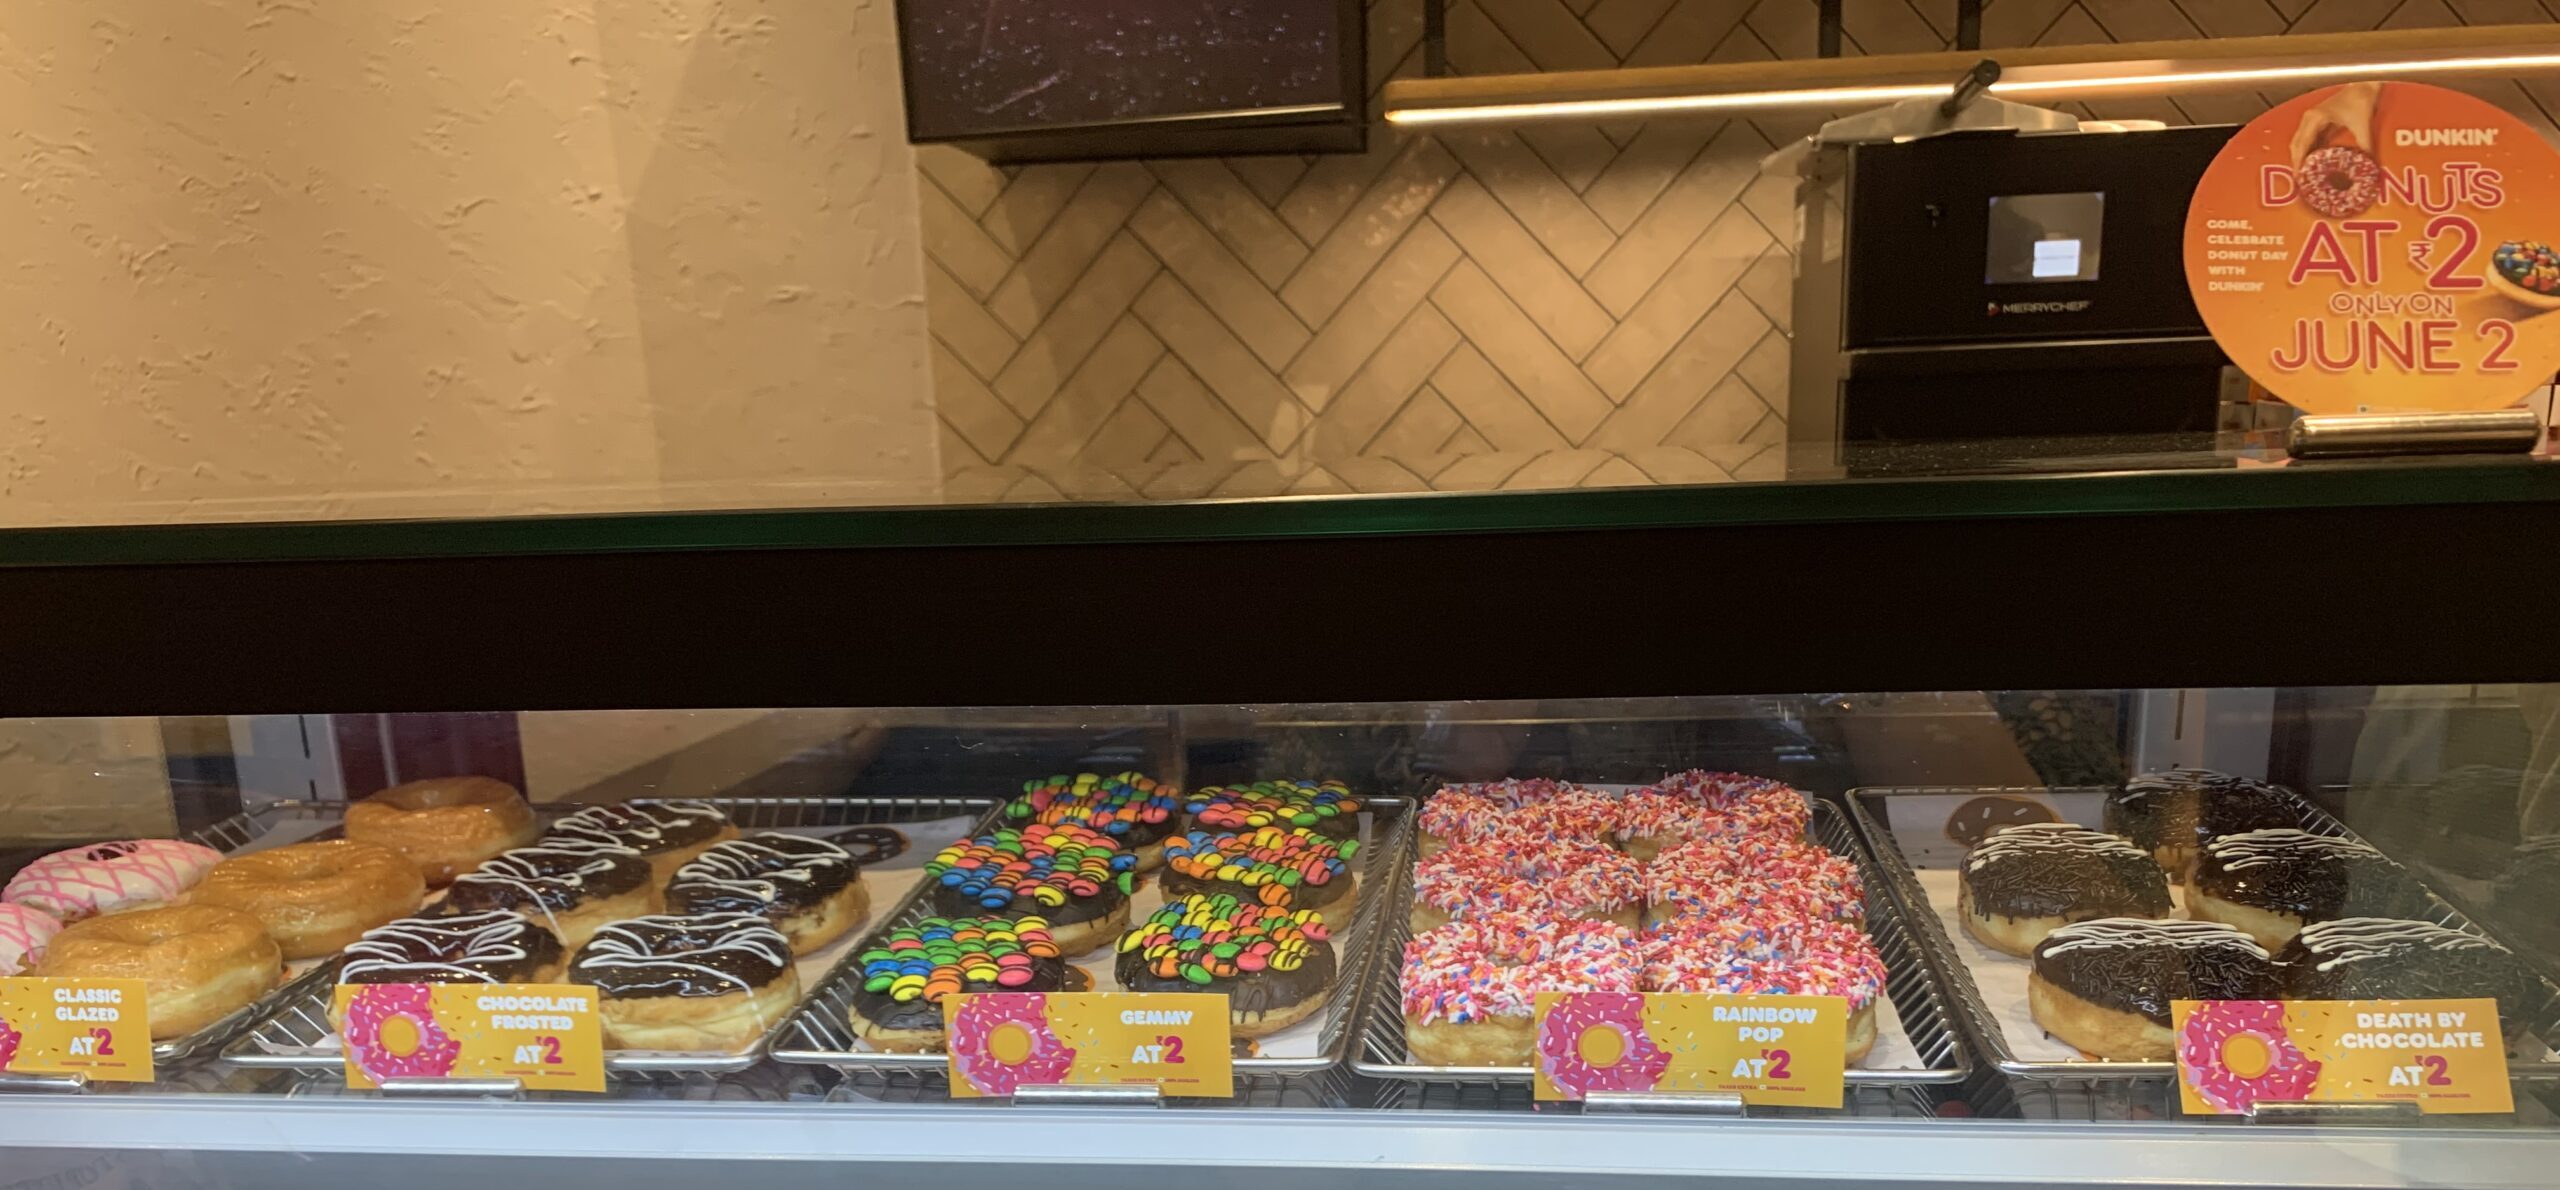 Dunkin’ donuts at Rs 2